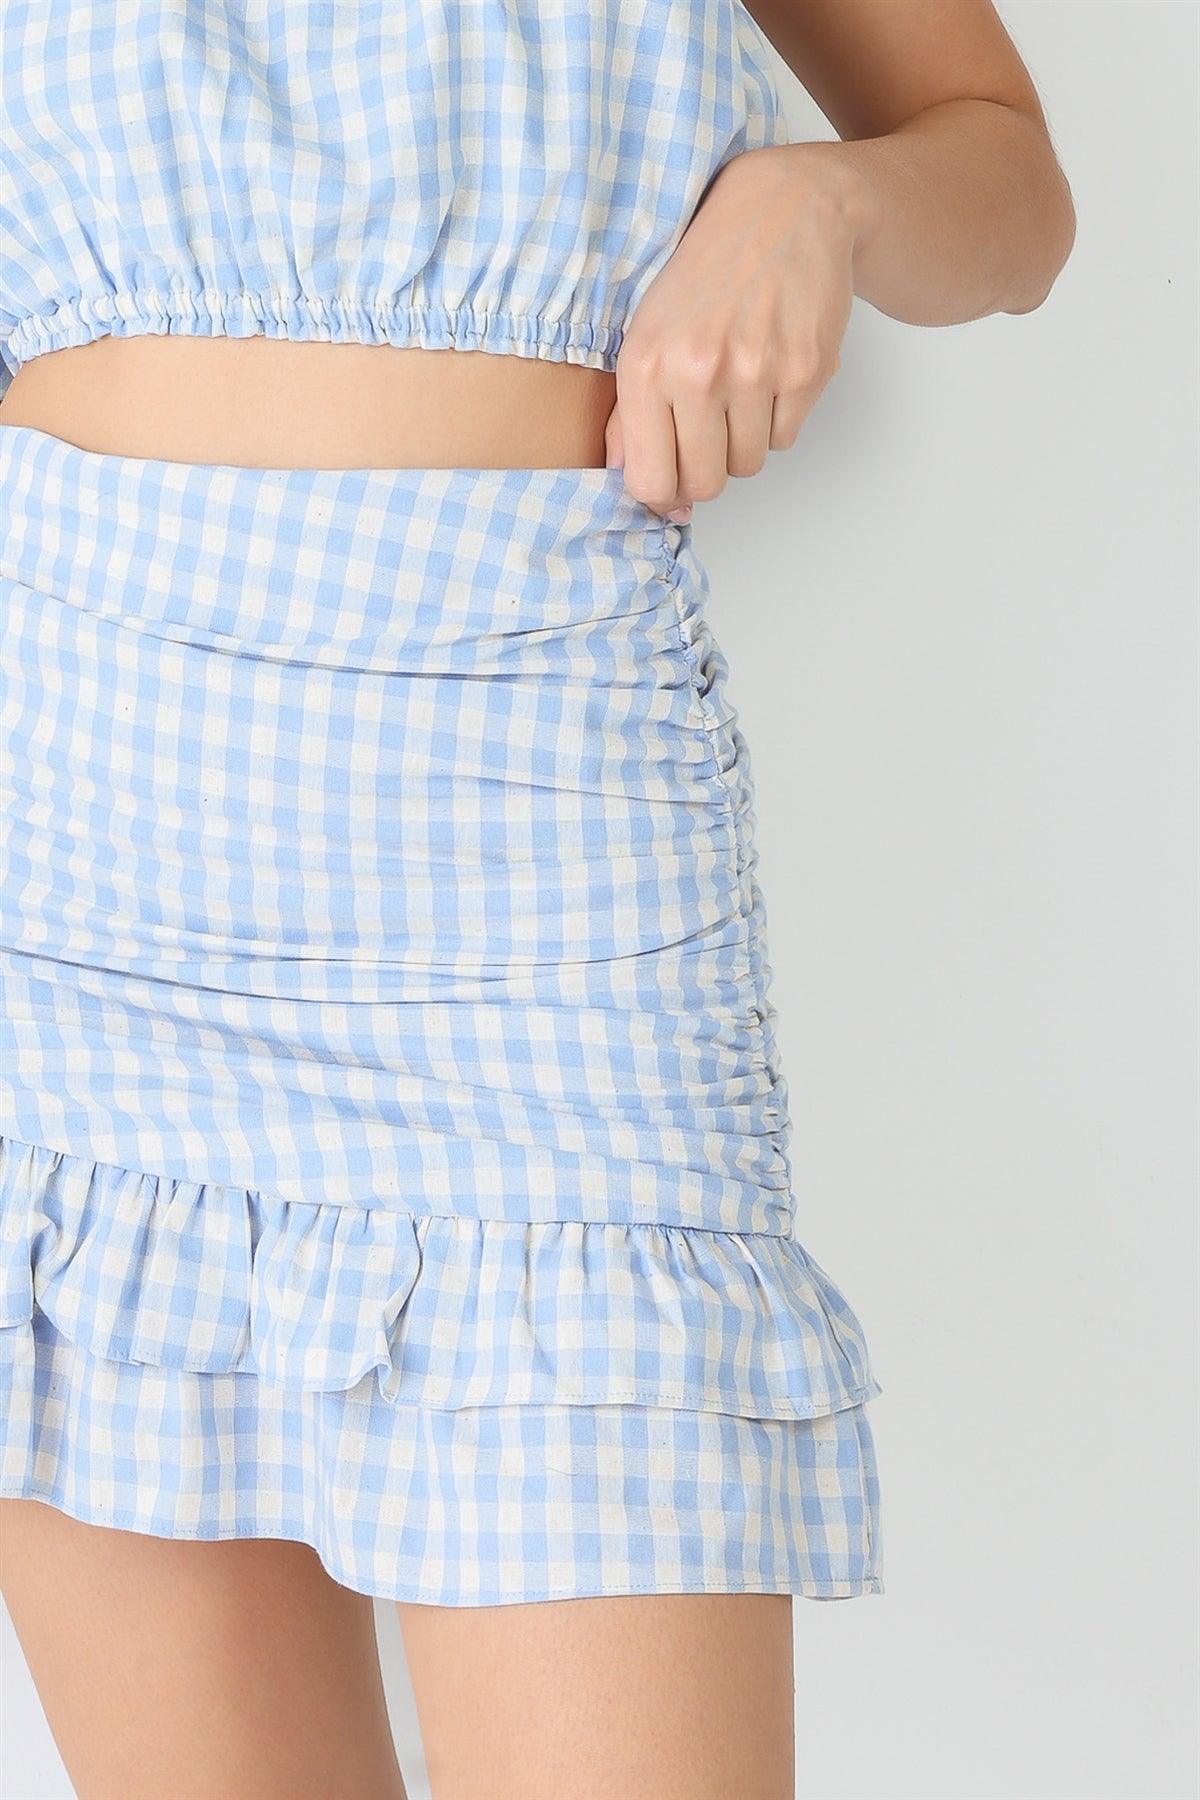 Blue Plaid Cotton Strapless Crop Top & High Waist Flare Hem Mini Skirt Set /3-2-1